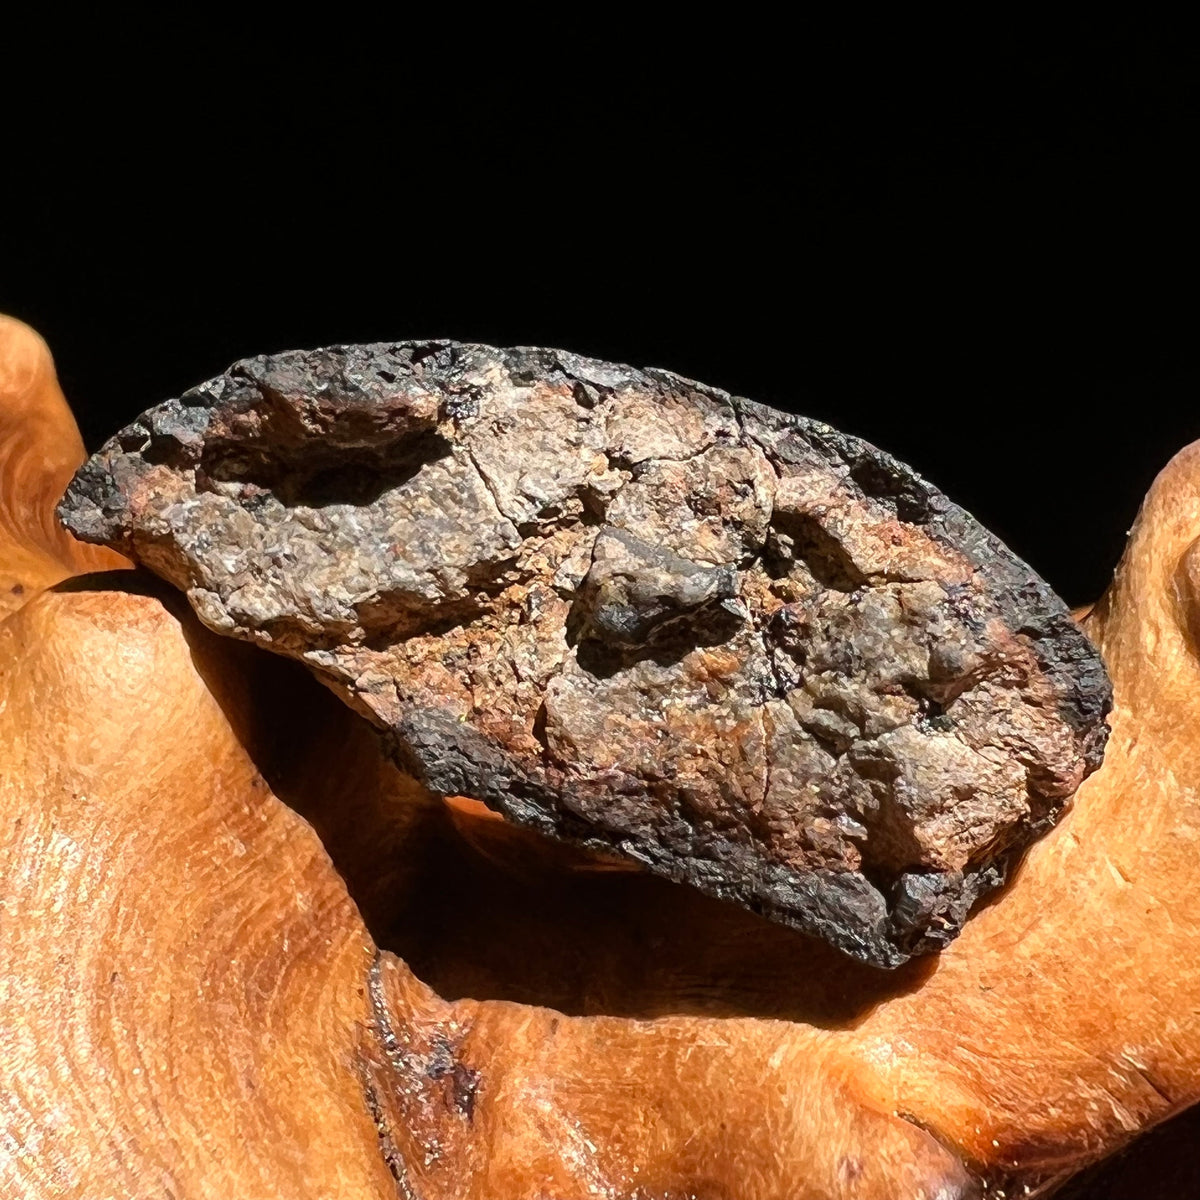 Chelyabinsk Meteorite Superbolide Asteroid 3.9 grams #12-Moldavite Life